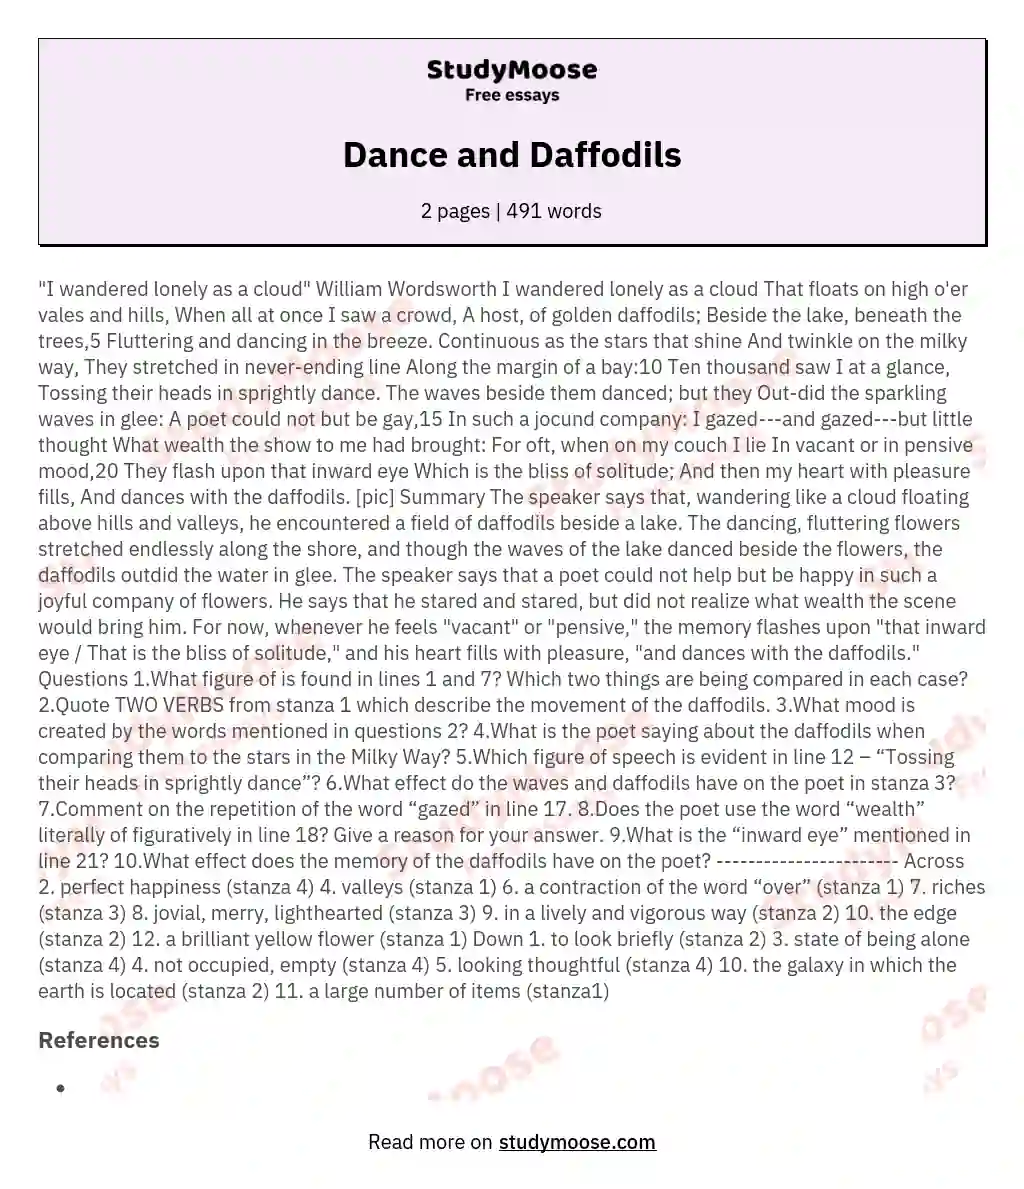 Dance and Daffodils essay